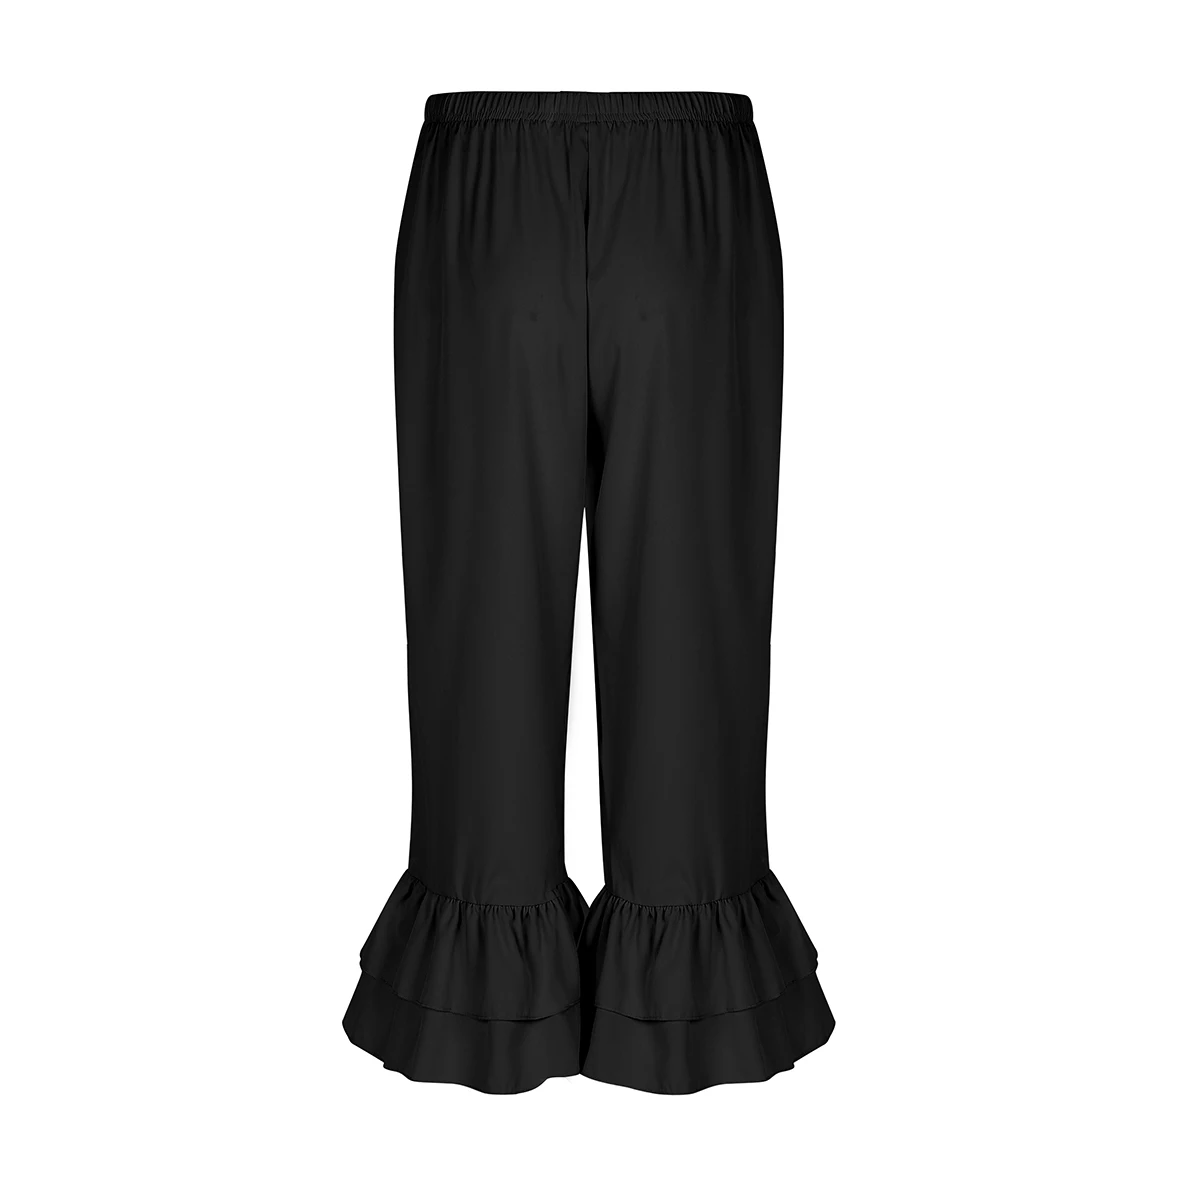 Women Ladies Sweet Dance Trousers Retro Vintage Elastic Waist Ruffles Hem Pantaloons Bloomers Underpants Victorian Era Costume capri trousers